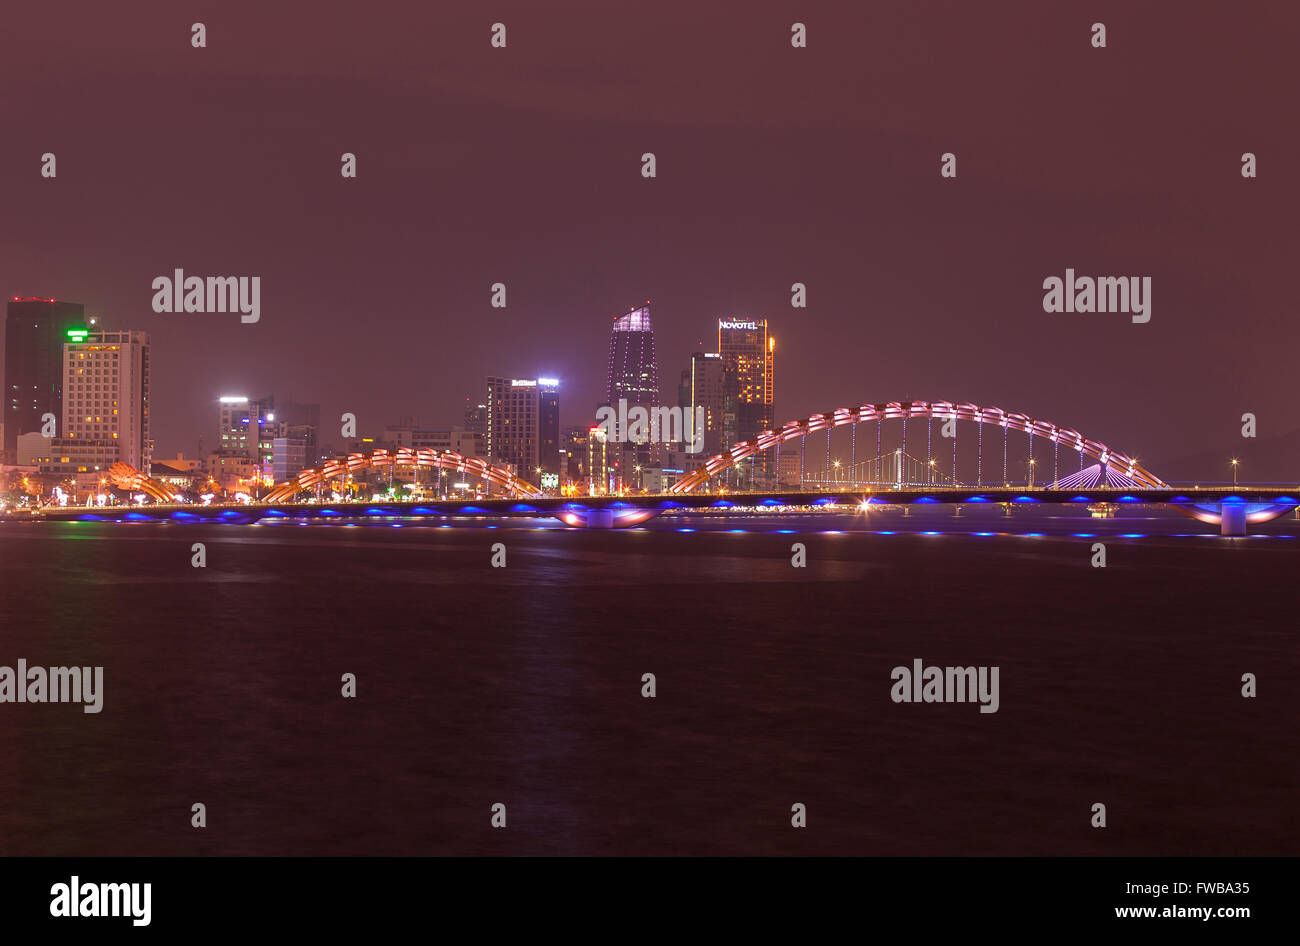 Illuminated Cầu Rồng or dragon bridge over the Han River at night, Da Nang, Central Vietnam, Vietnam Stock Photo